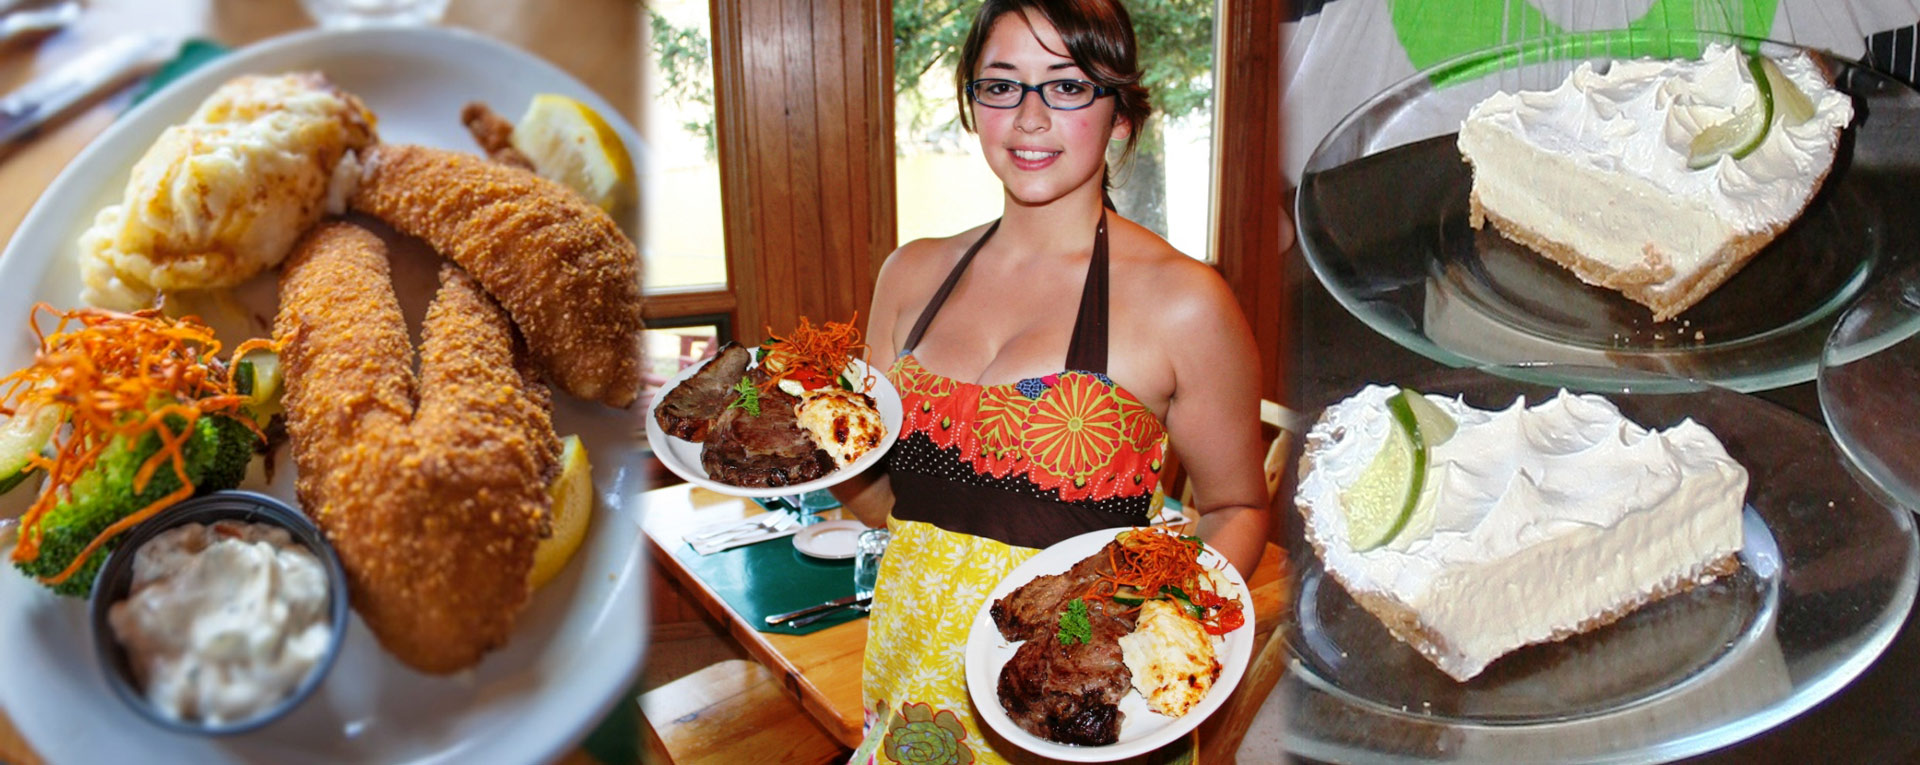 Crow Rock Waitress, Fish Dinner and Key Lime Pie Dessert